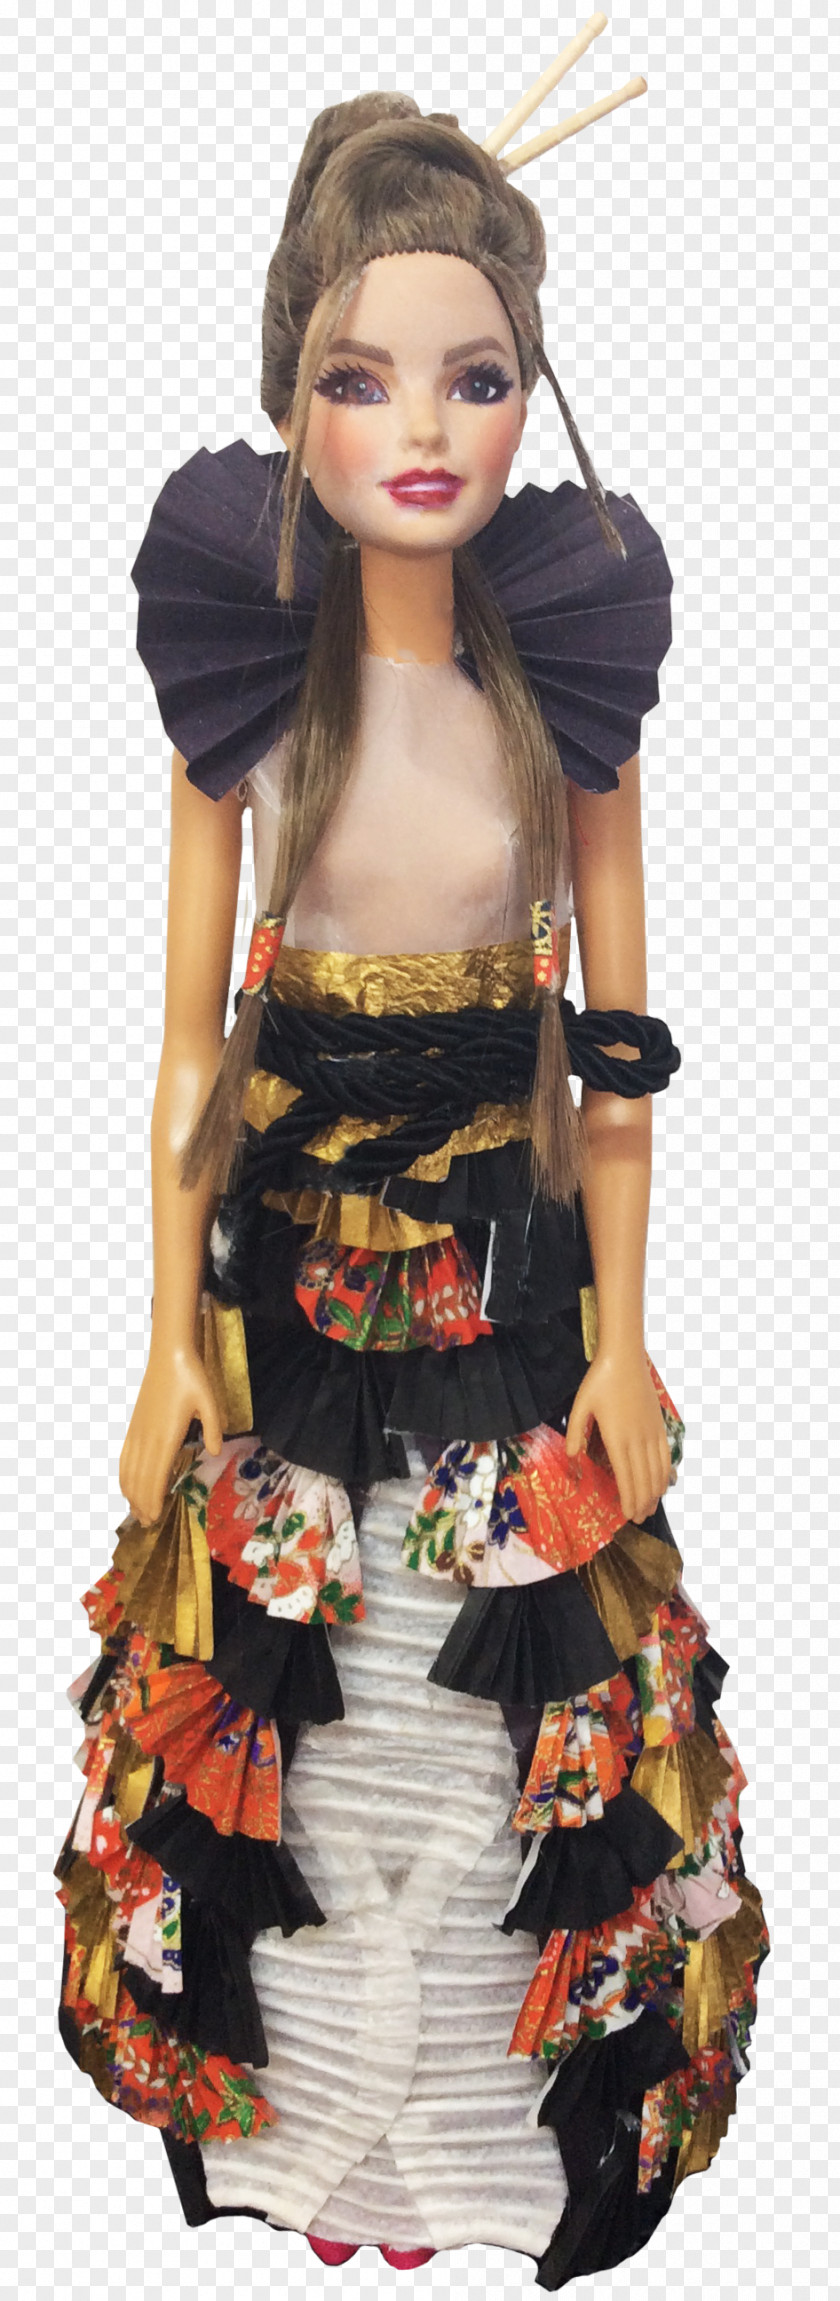 Barbie Fashion PNG